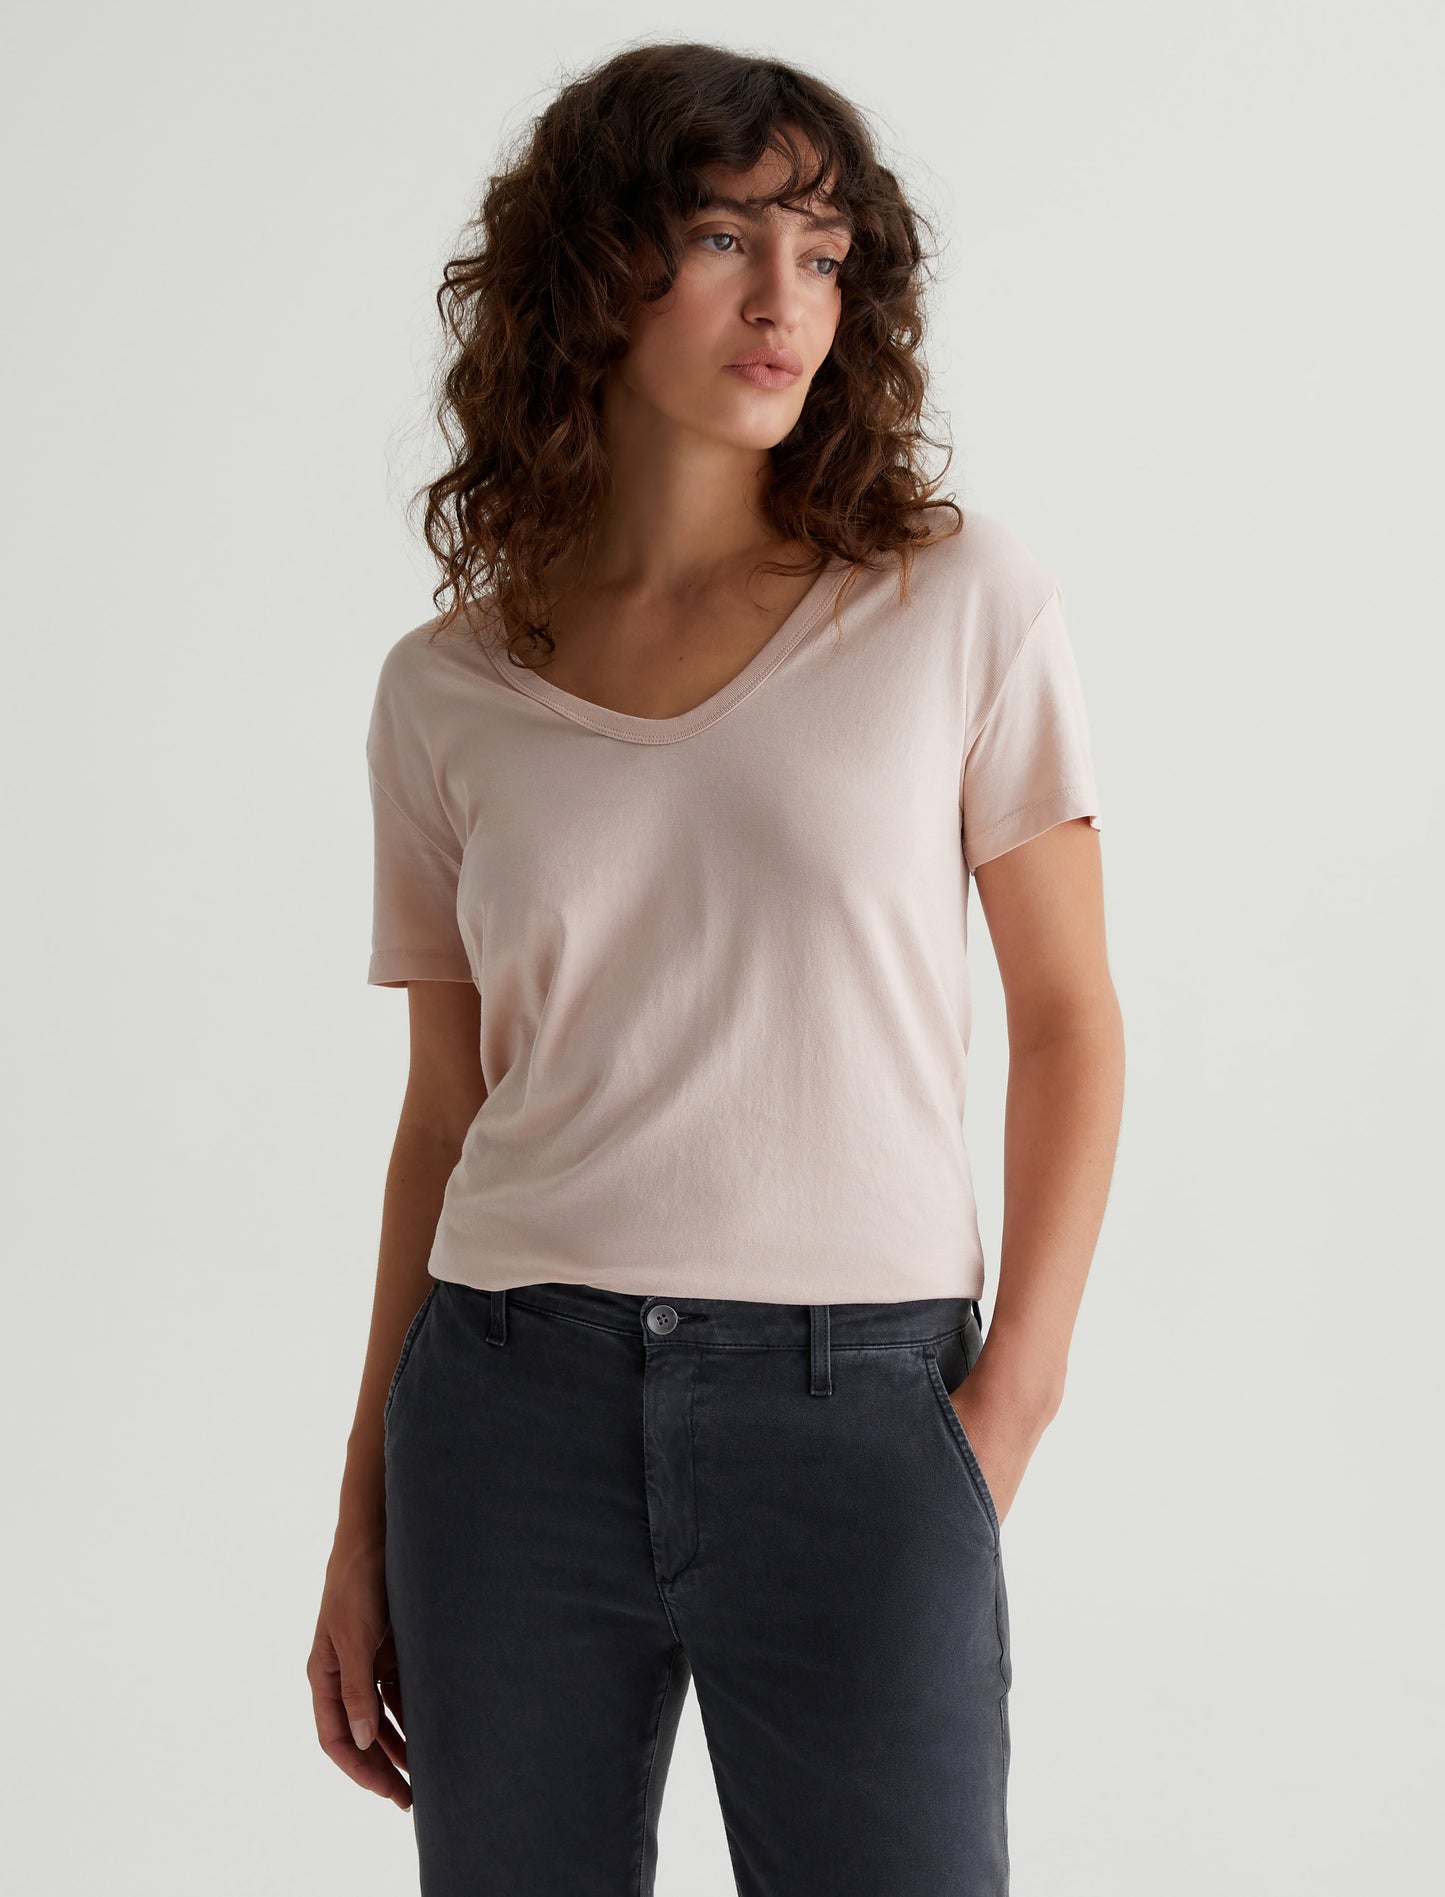 Aspen U Vintage Pink Relaxed Fit Short Sleeve U Neck T-Shirt Womens Top Photo 1